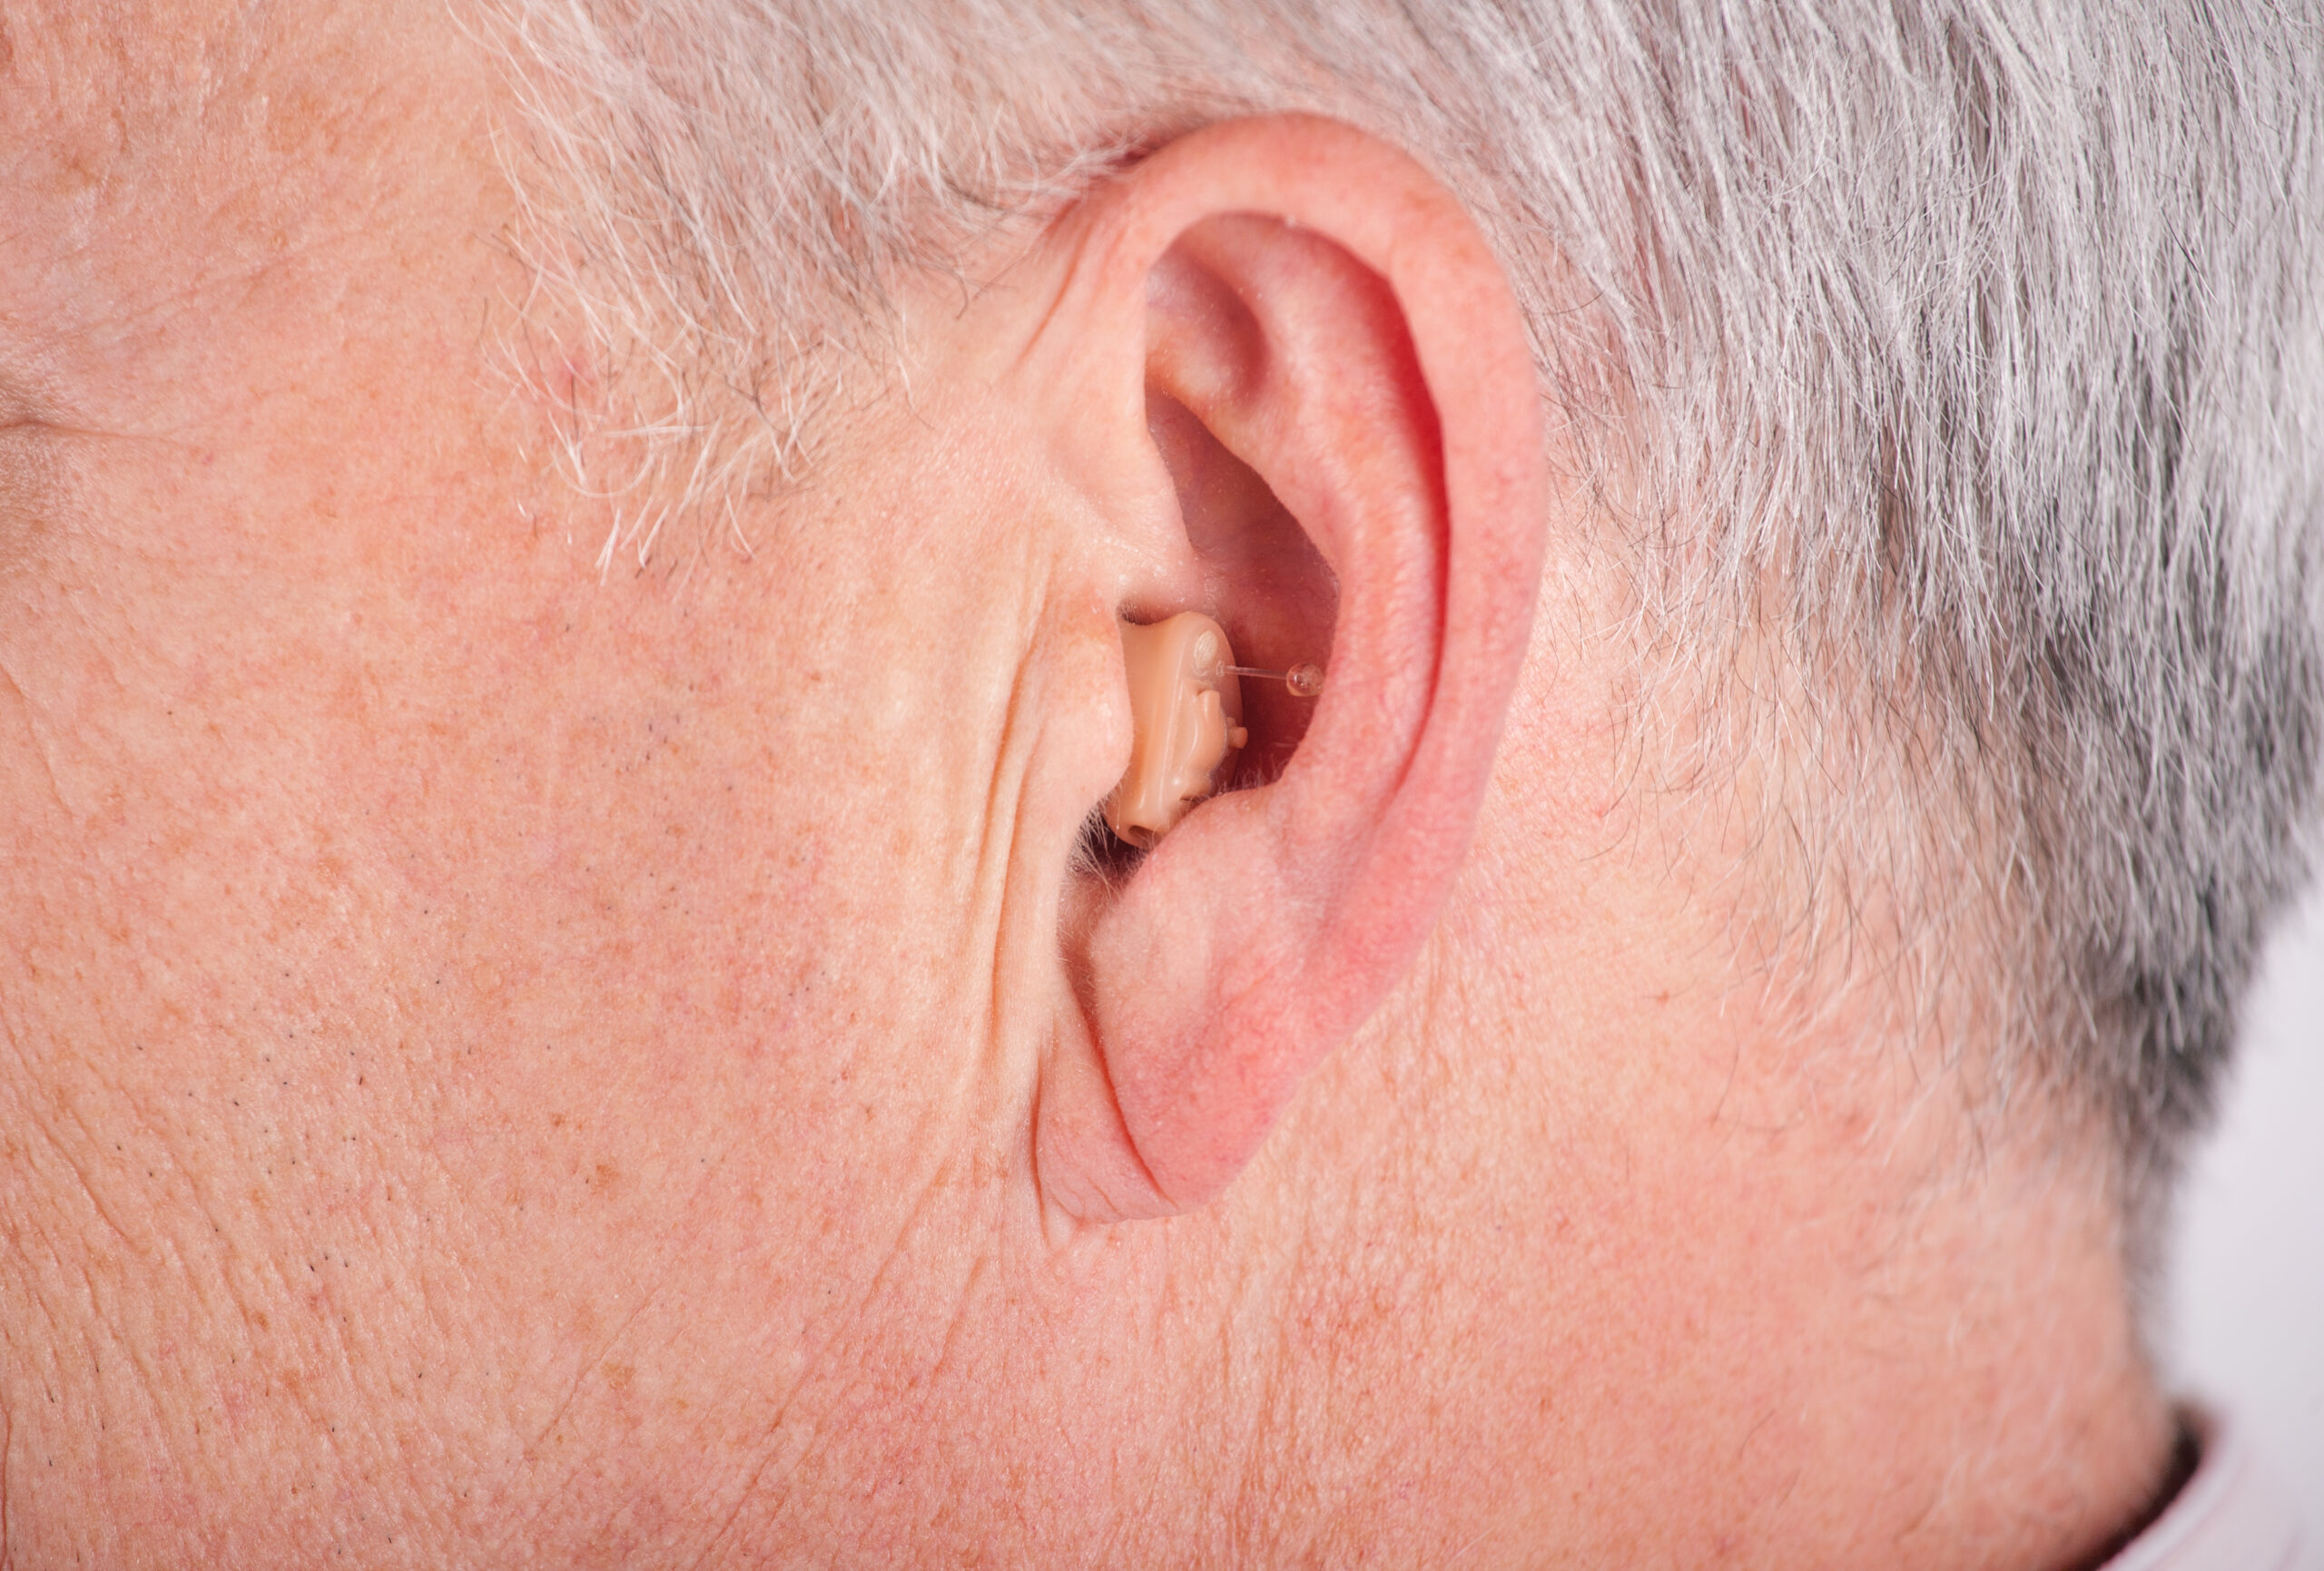 Elderly people wearing hearing aids